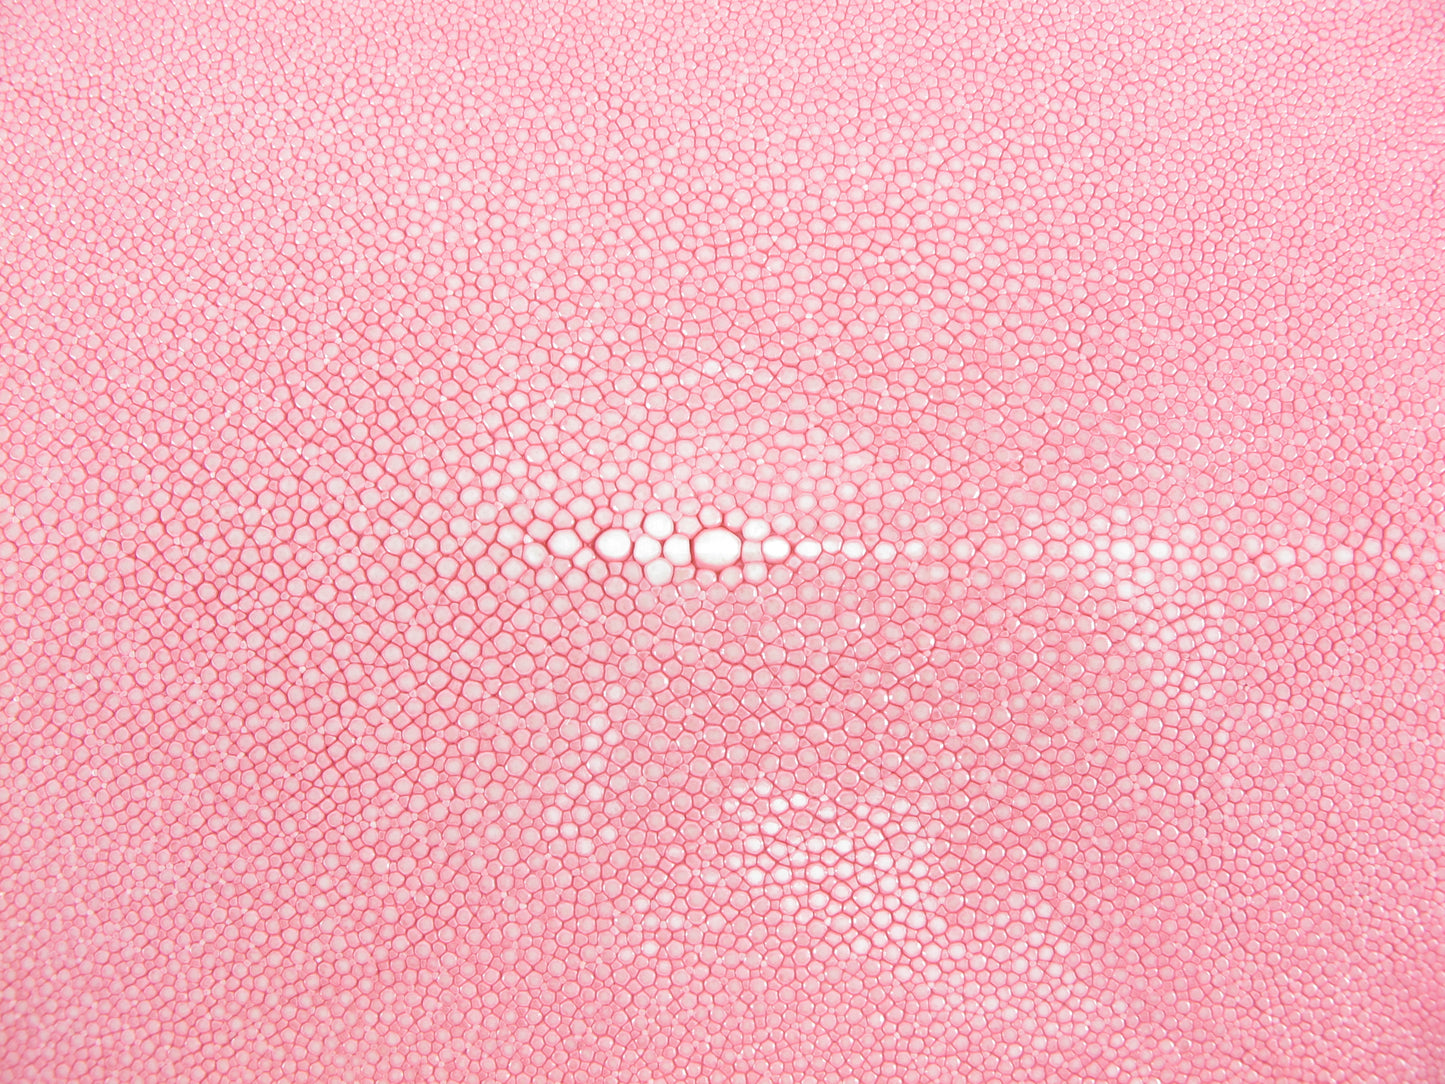 Genuine Polished Stingray Skin Leather Hide Pelt Long Shape Pink